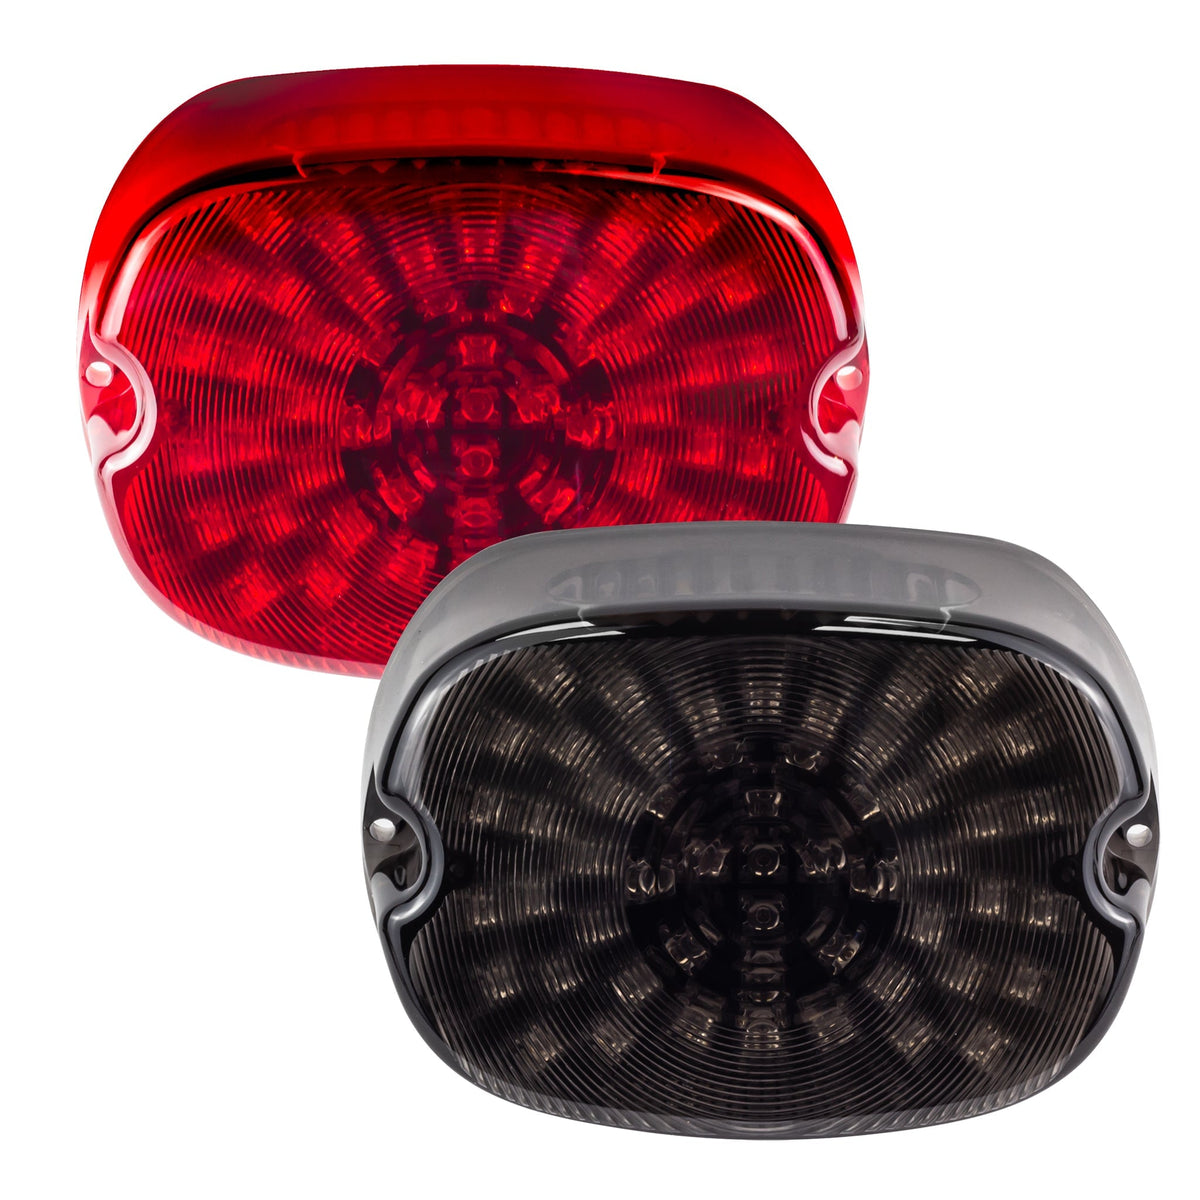 Eagle Lights Low Profile LED Brake Light with Built In LED Turn Signal Kit for Harley Davidson Motorcycles